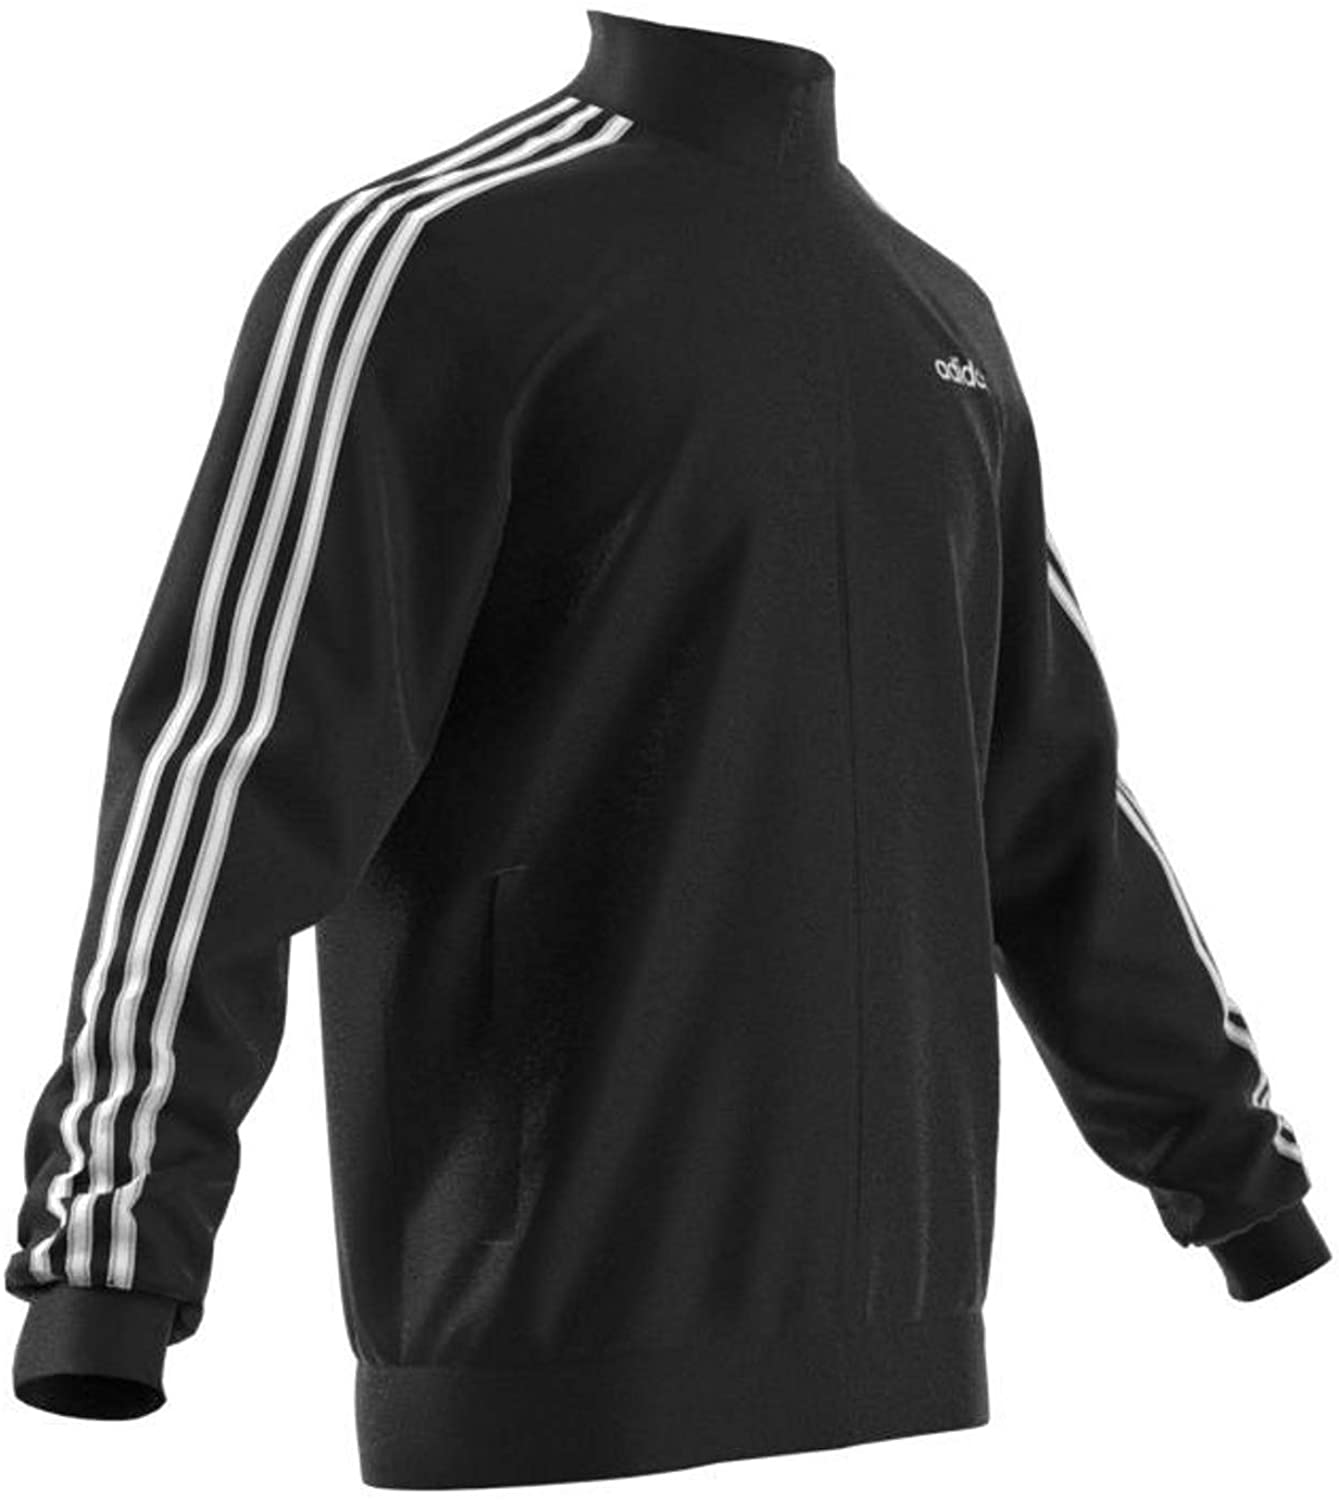 Adidas Mens Essentials 3-stripes Tricot Track Jacket